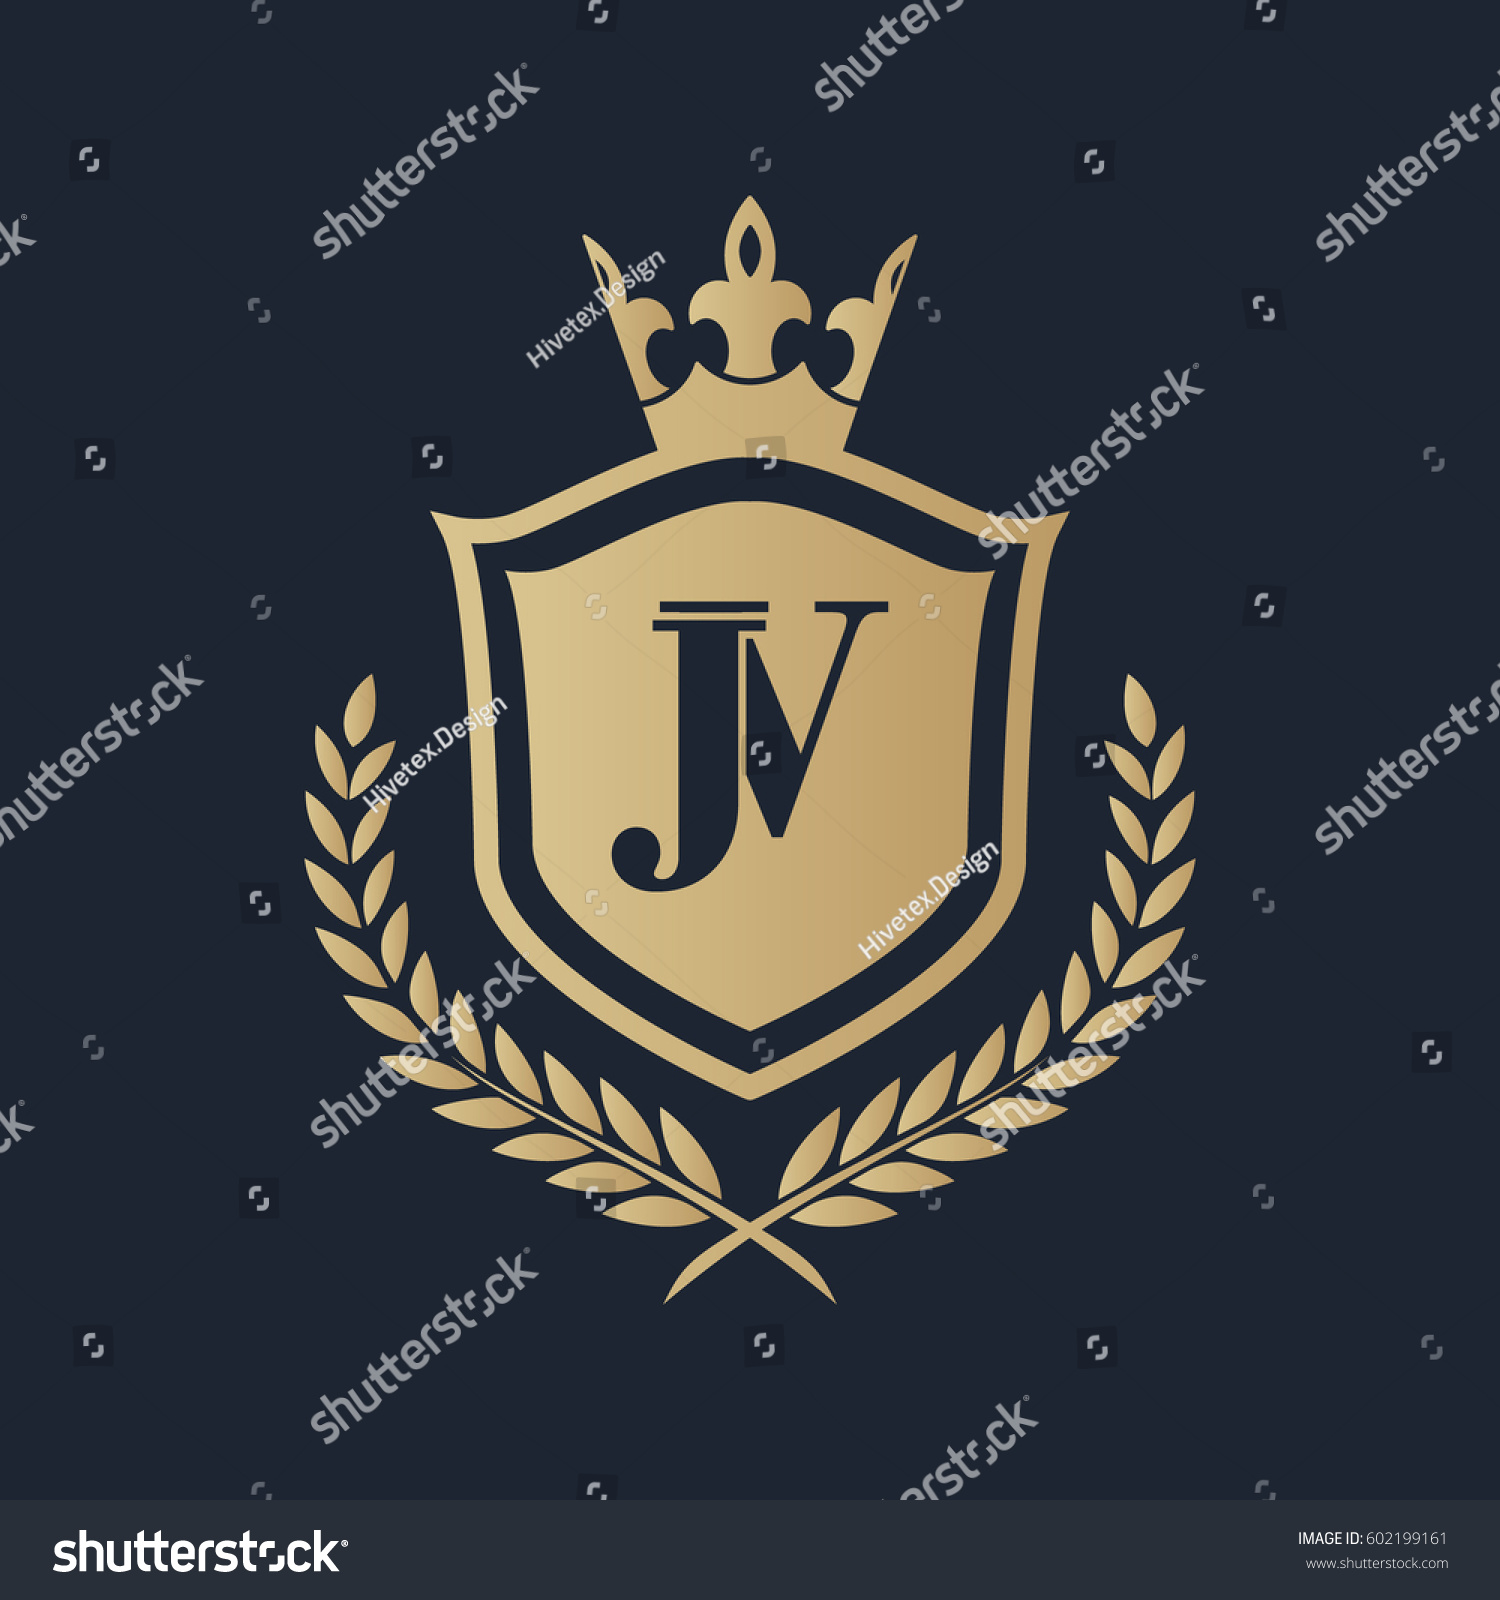 Jv Logo Stock Vector Royalty Free